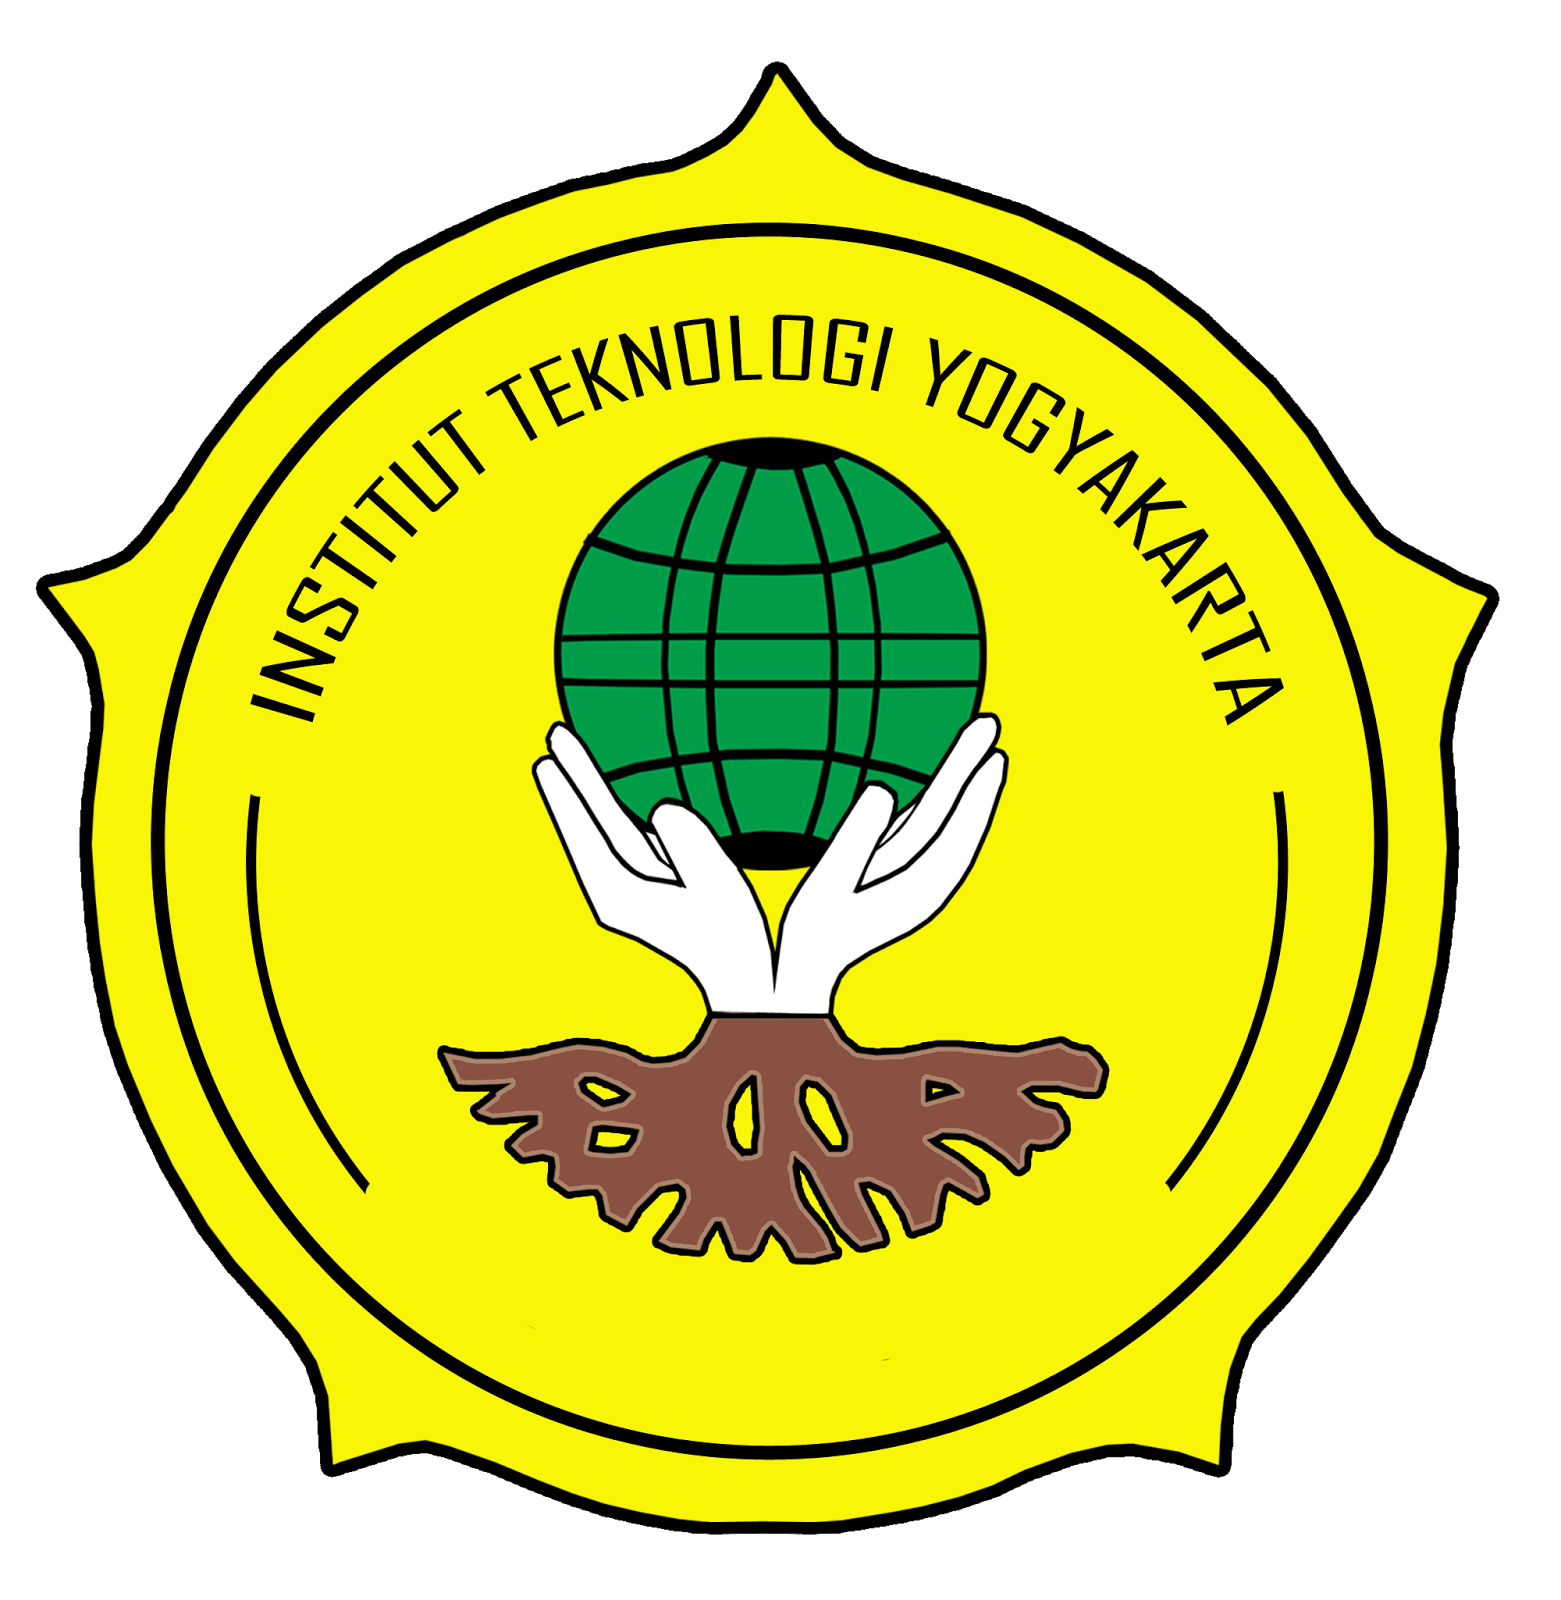  Logo  Institut  Teknologi Yogyakarta ITY Terbaru Kado Wisudaku